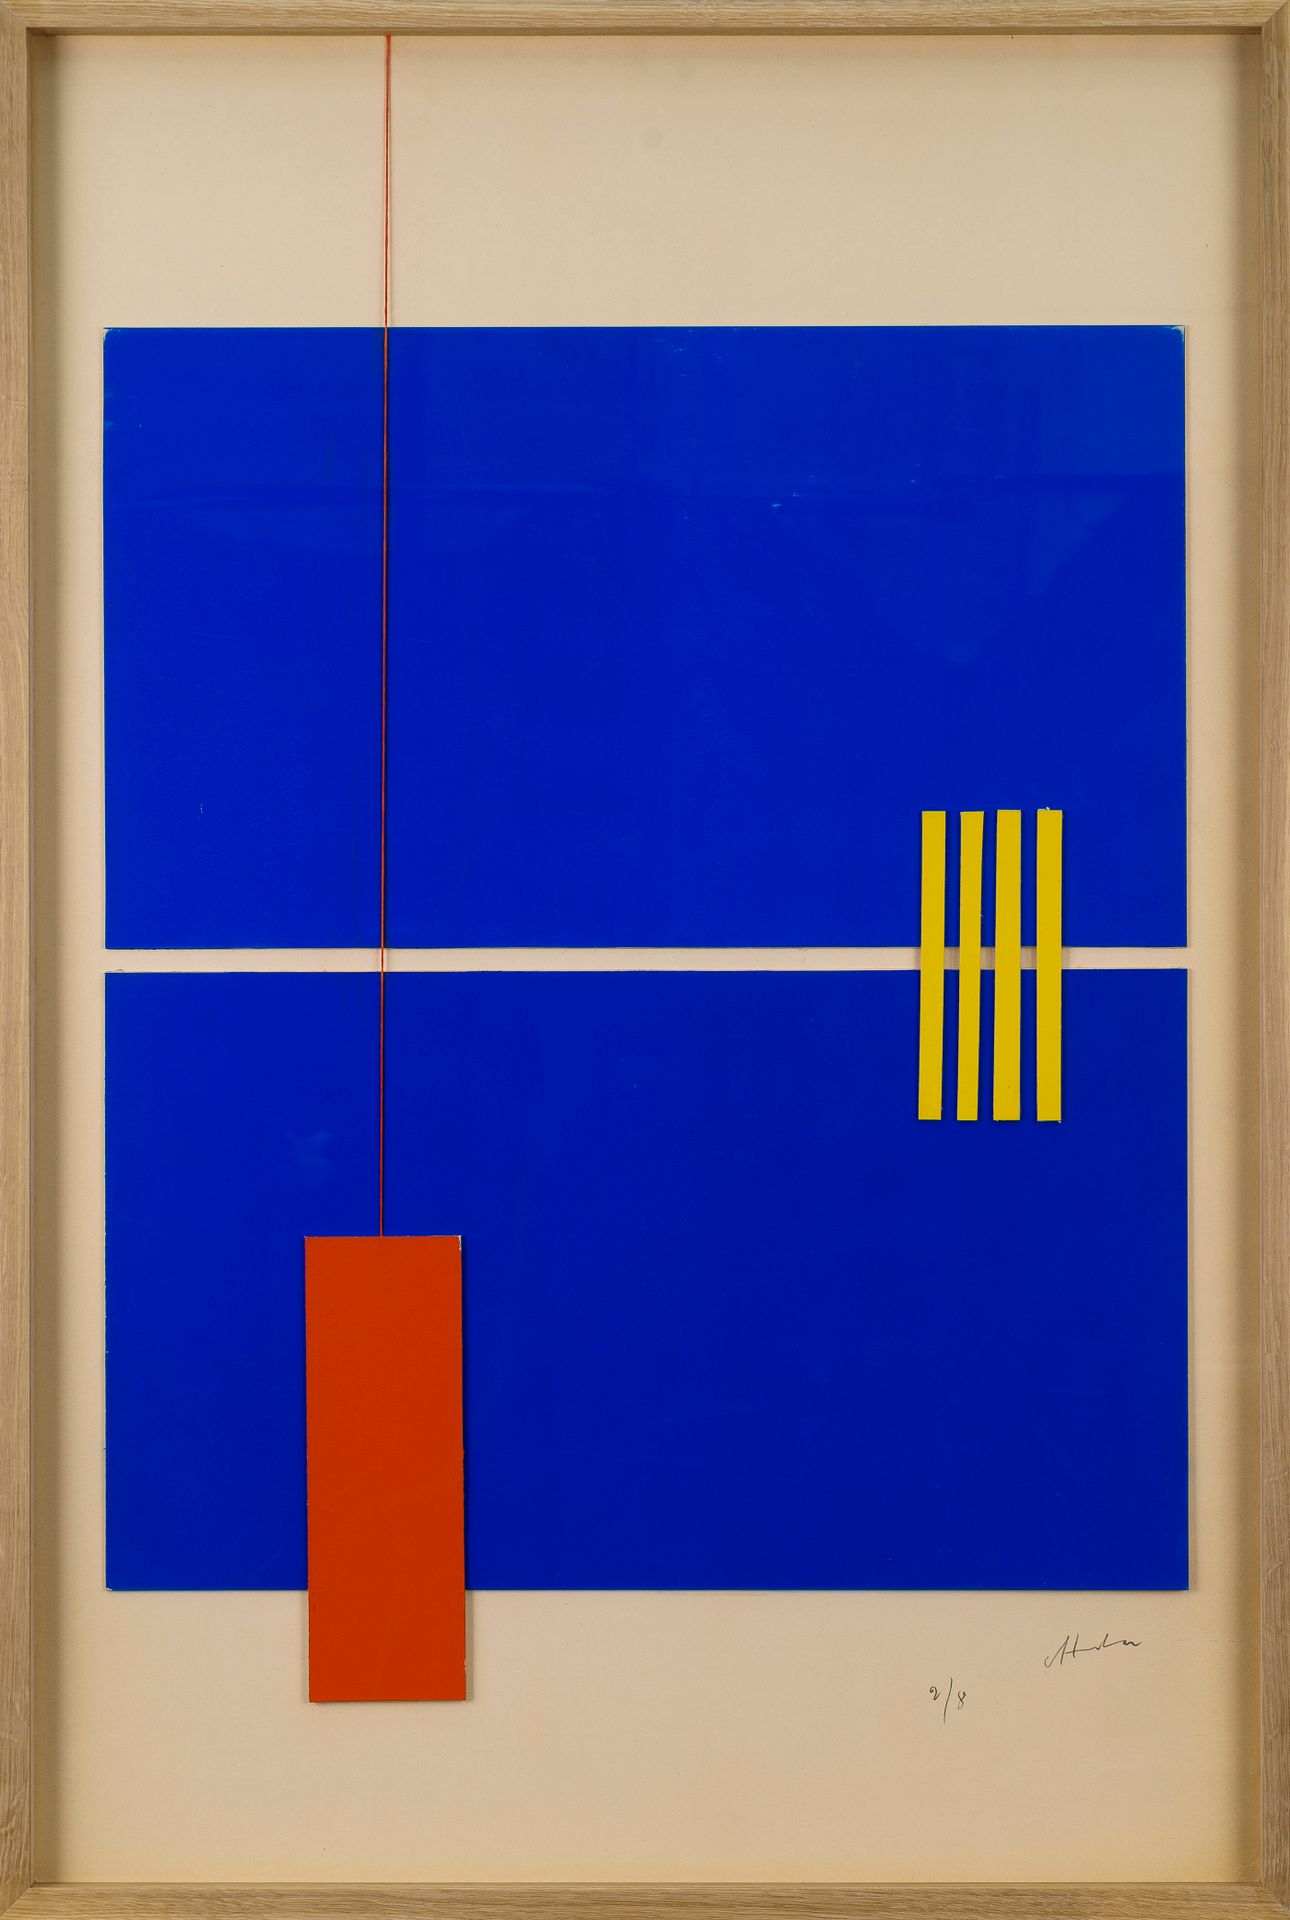 Null 阿尔贝-丘巴克(1925-2008)

几何构成，1980年

有签名和编号的拼贴画 2/8

119 x 78 cm

有框